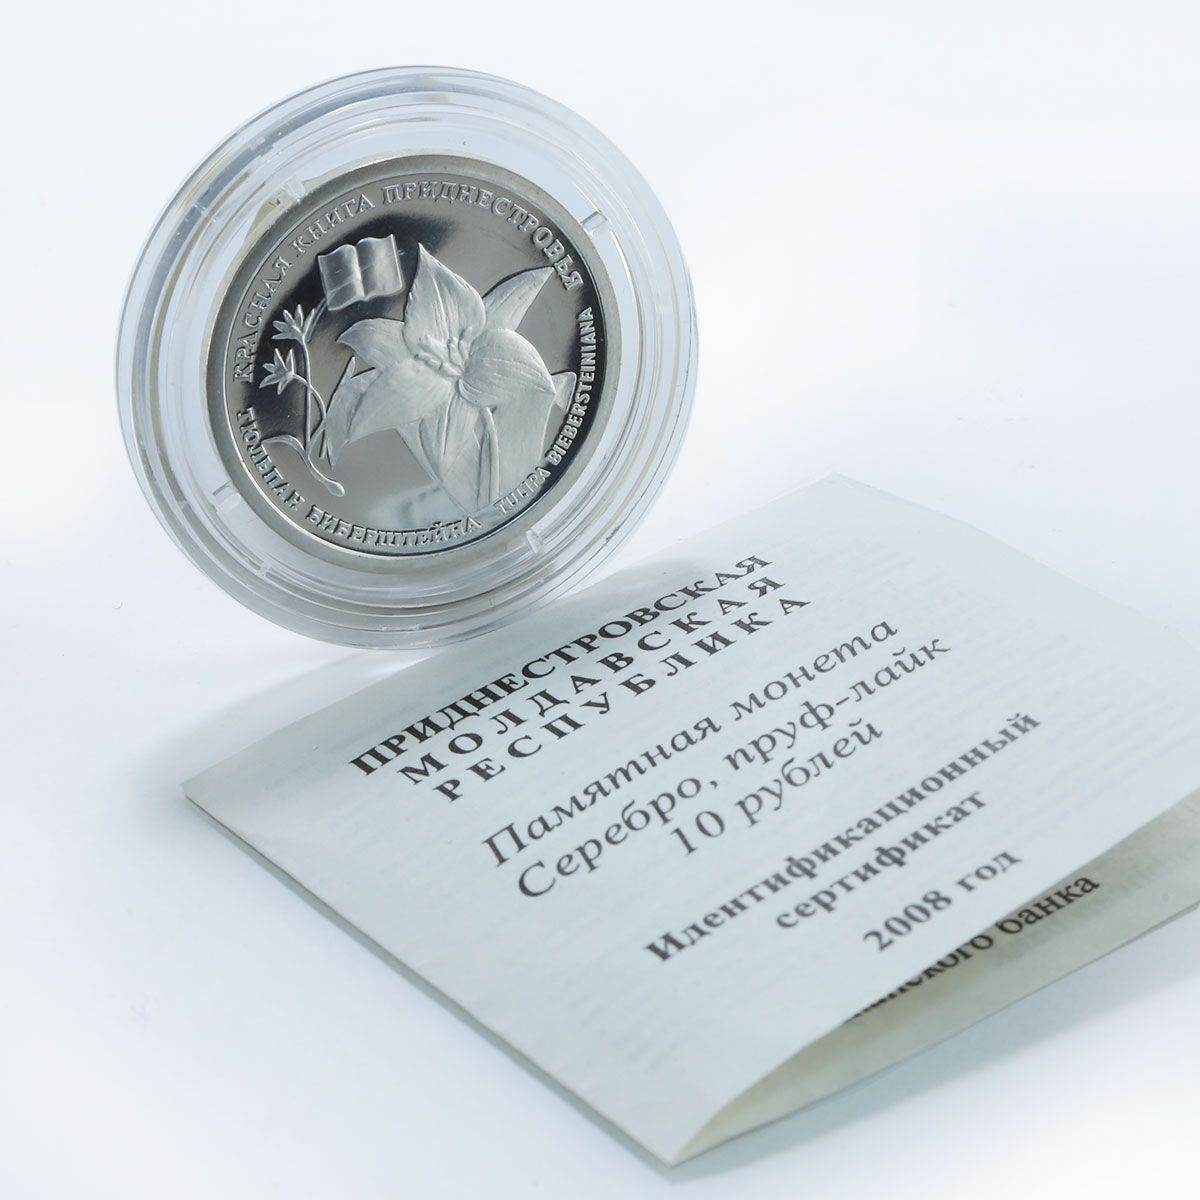 Transnistria 10 rubles, Red Book, Bieberstein's tulip, proof coin 2008